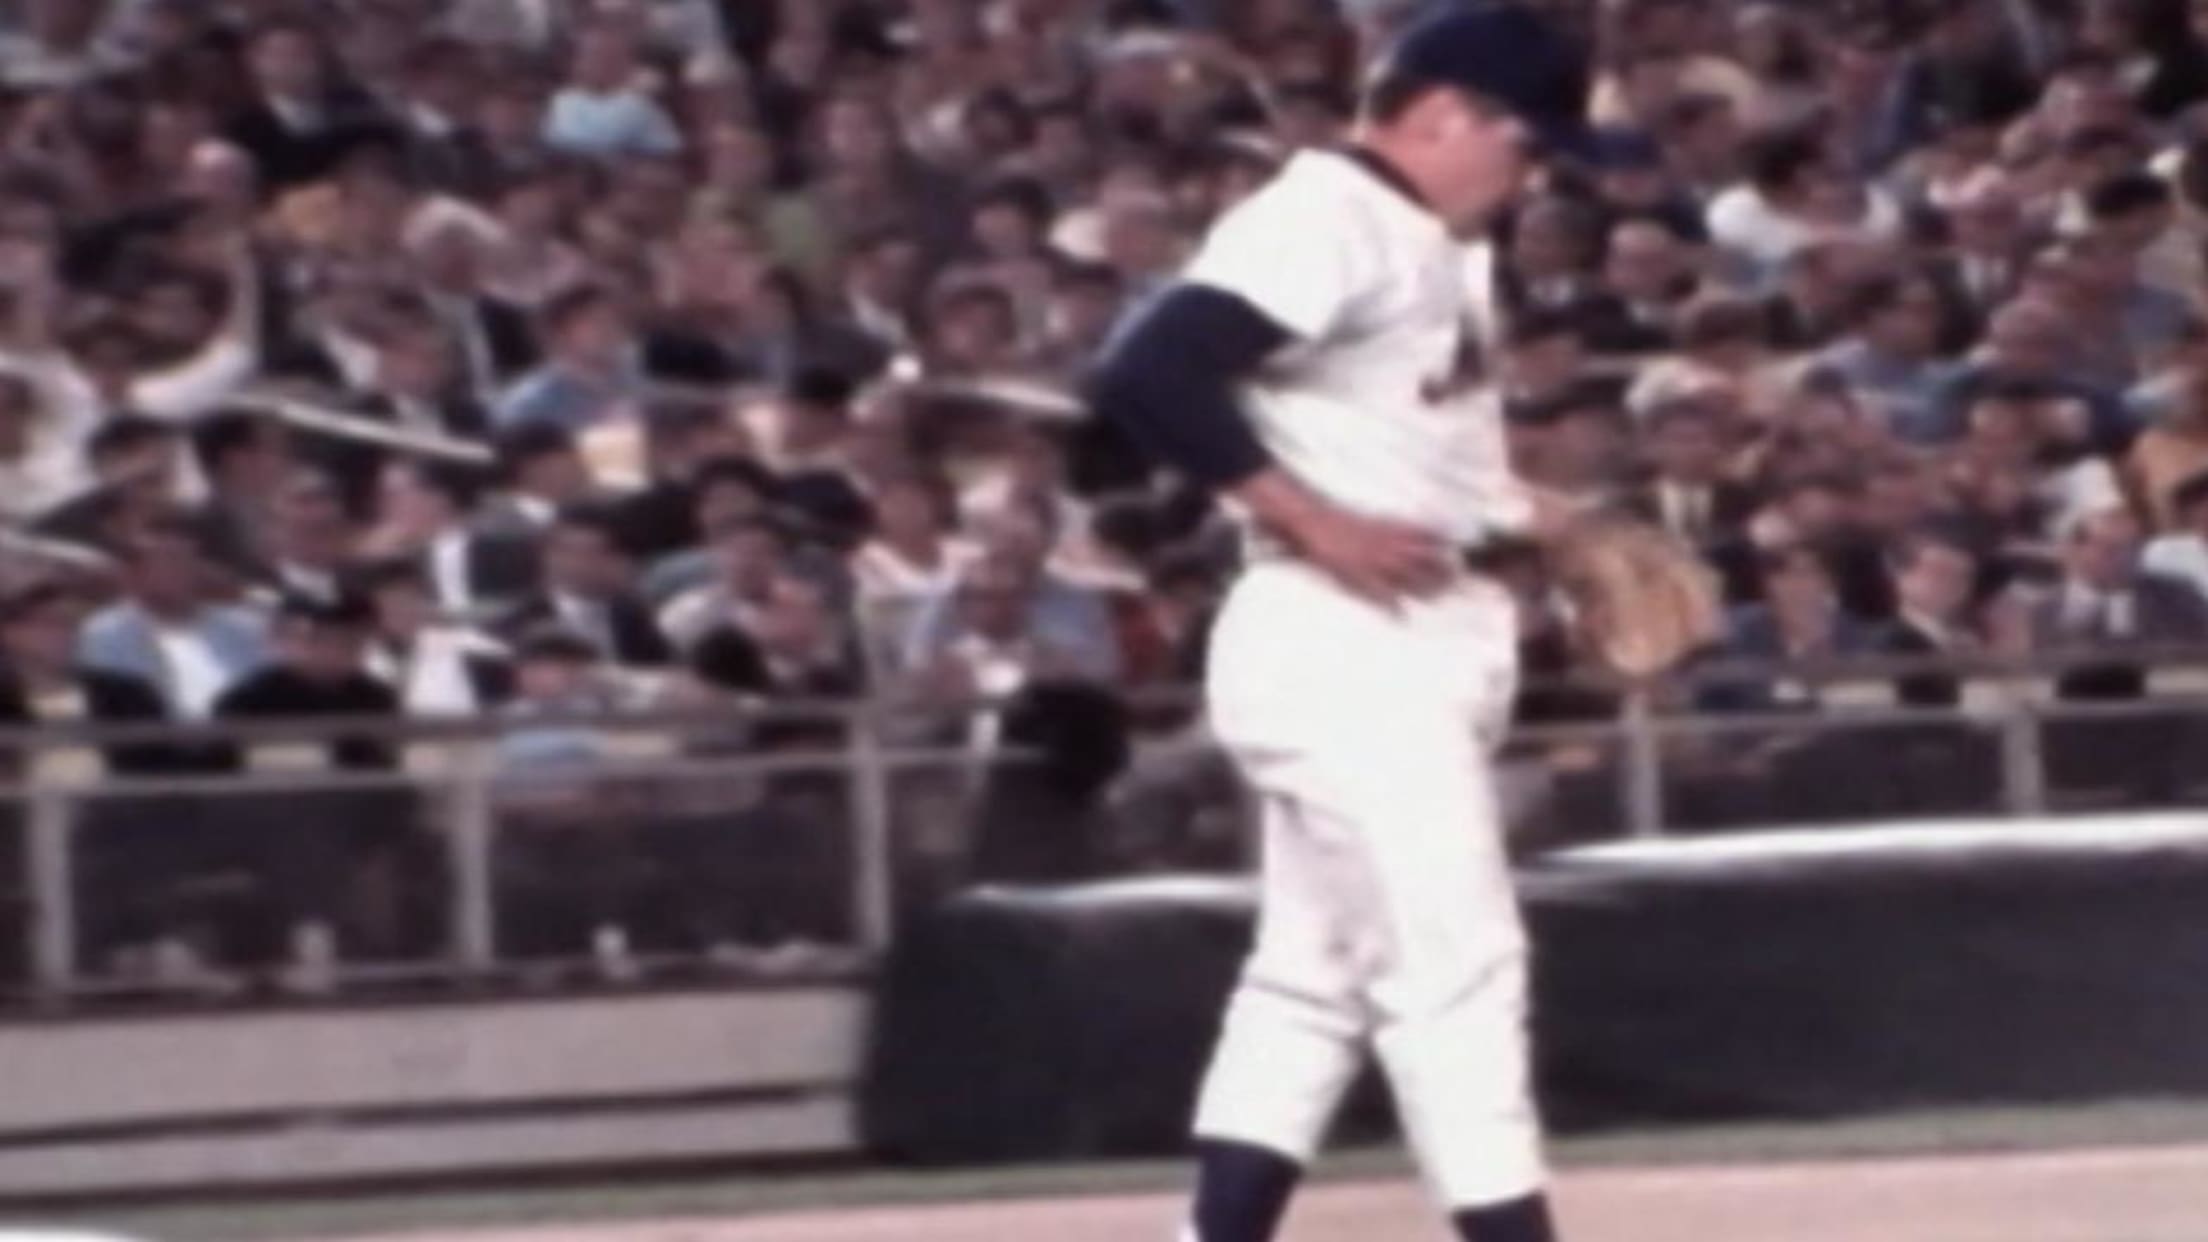 Seaver's Dominate September of '69, by New York Mets